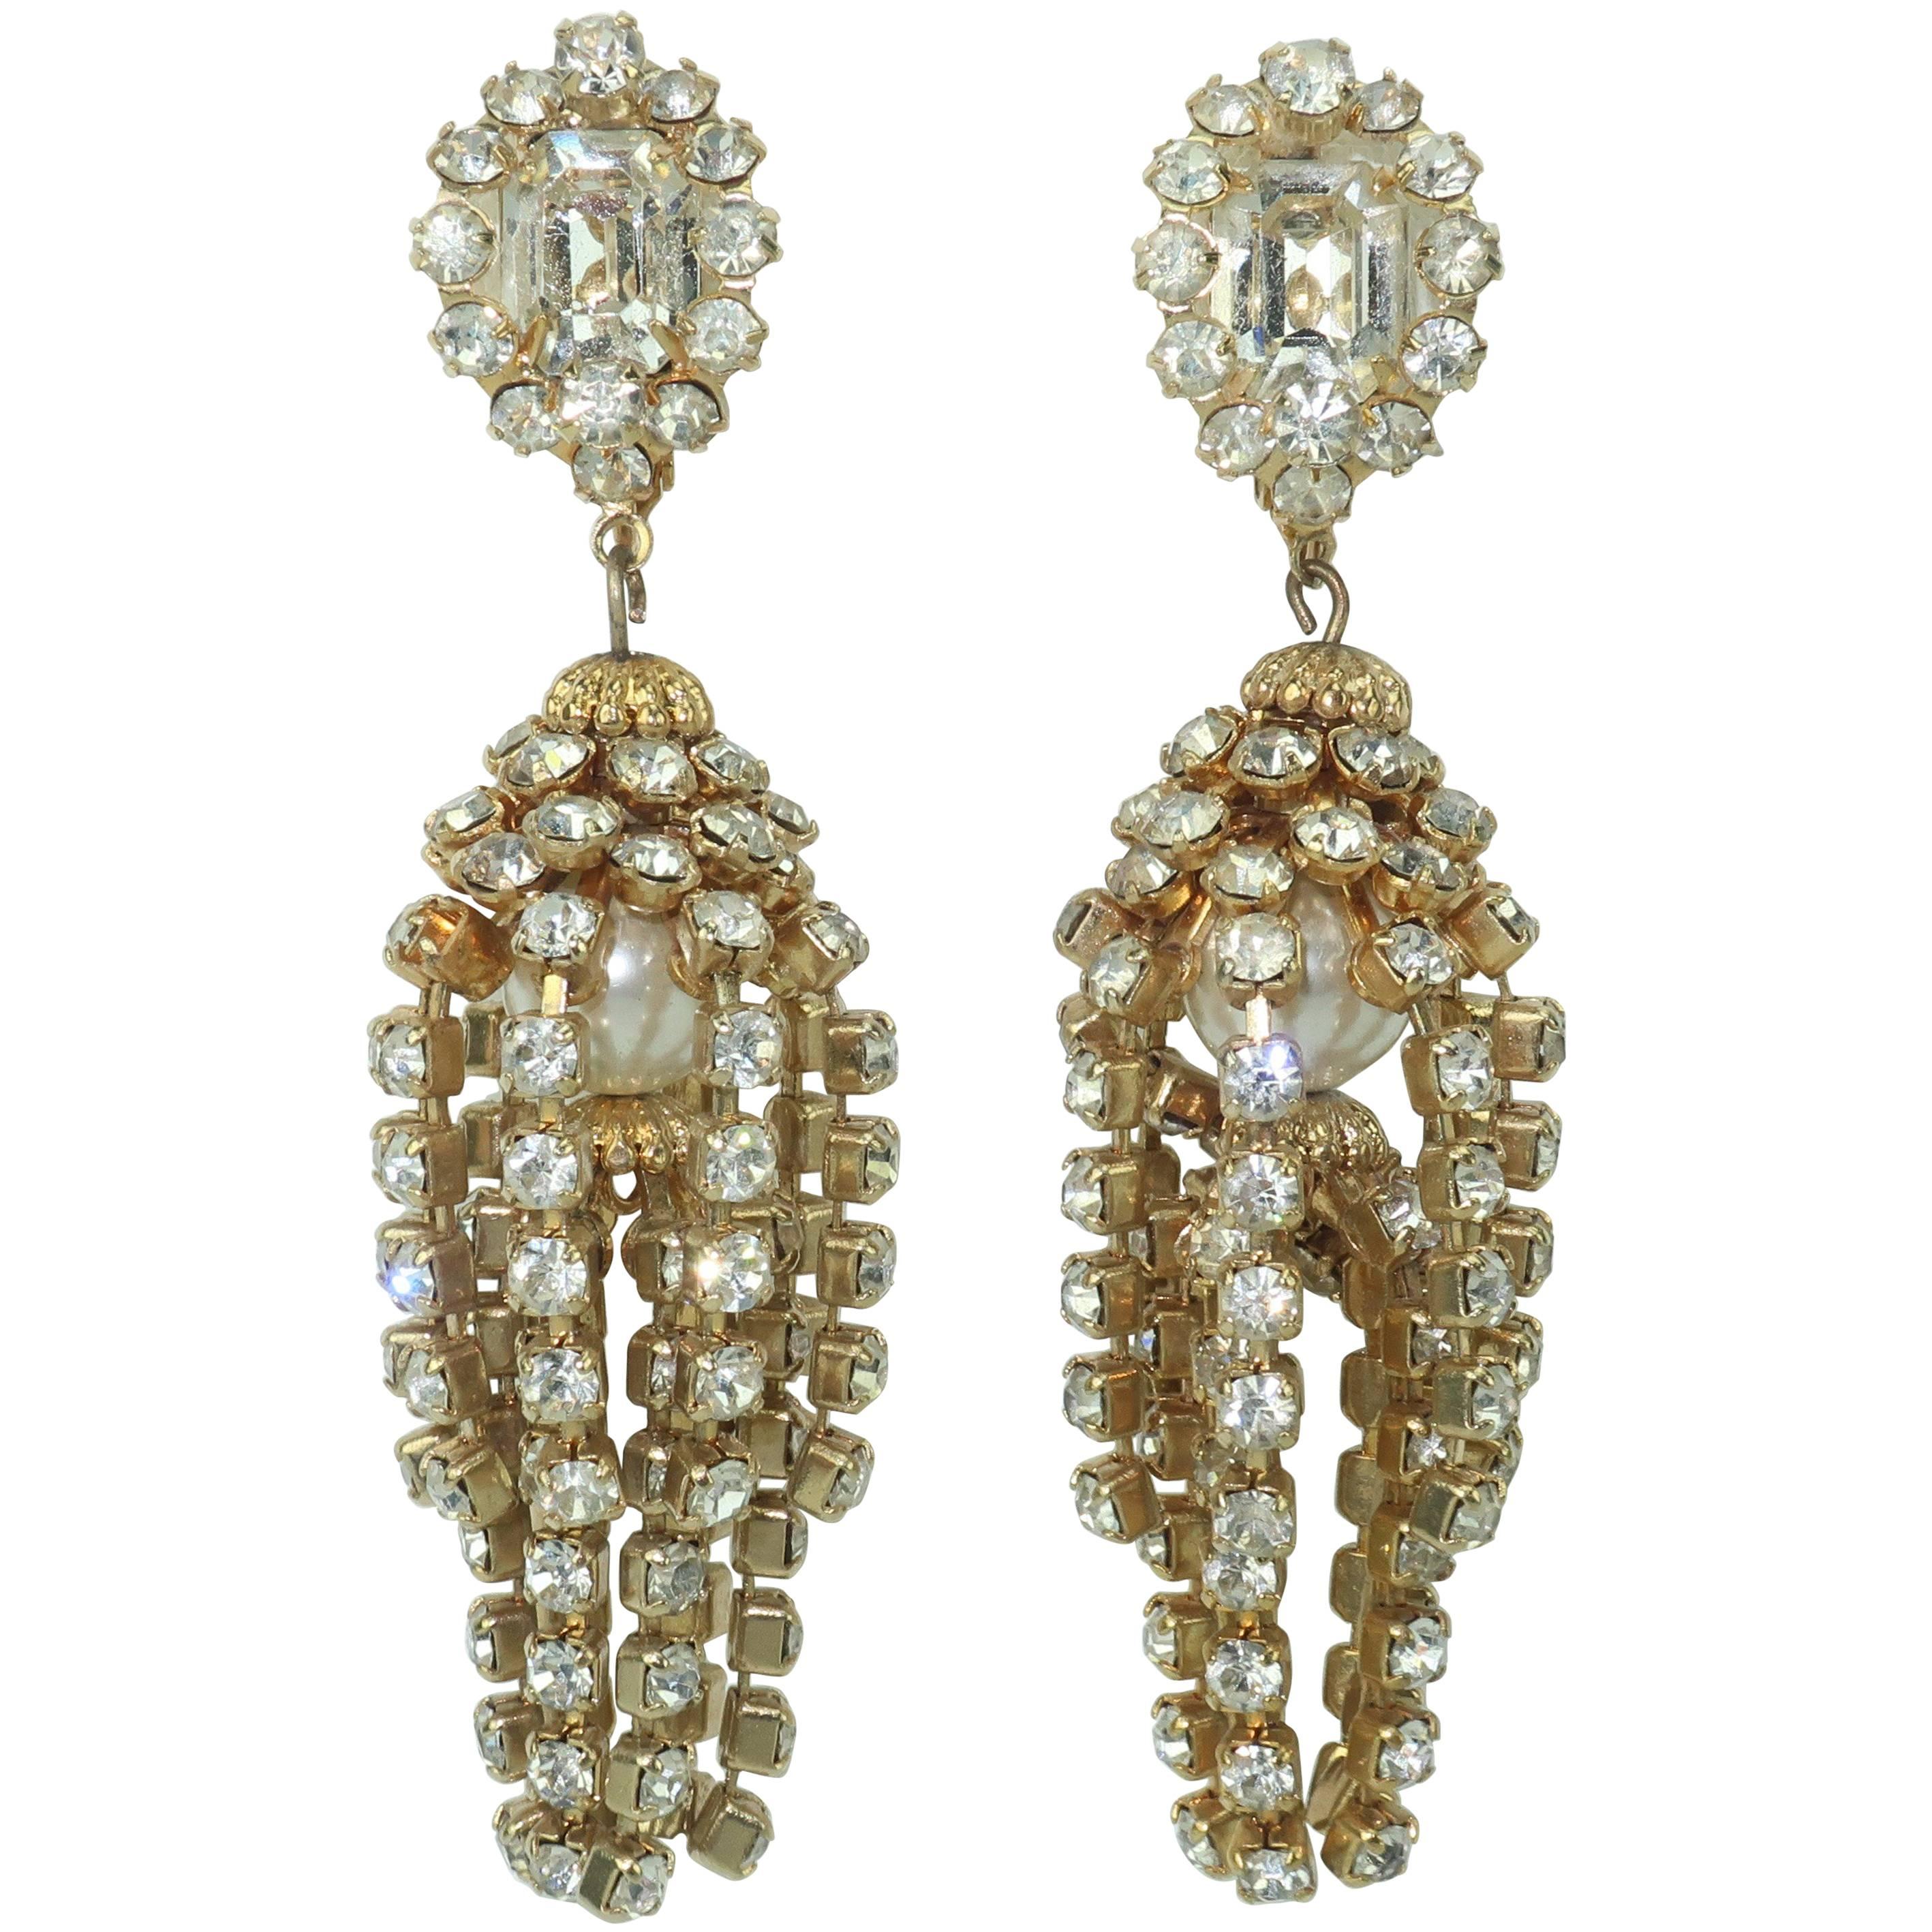 Rhinestone and Faux Pearl Chandelier Earrings, circa 1960